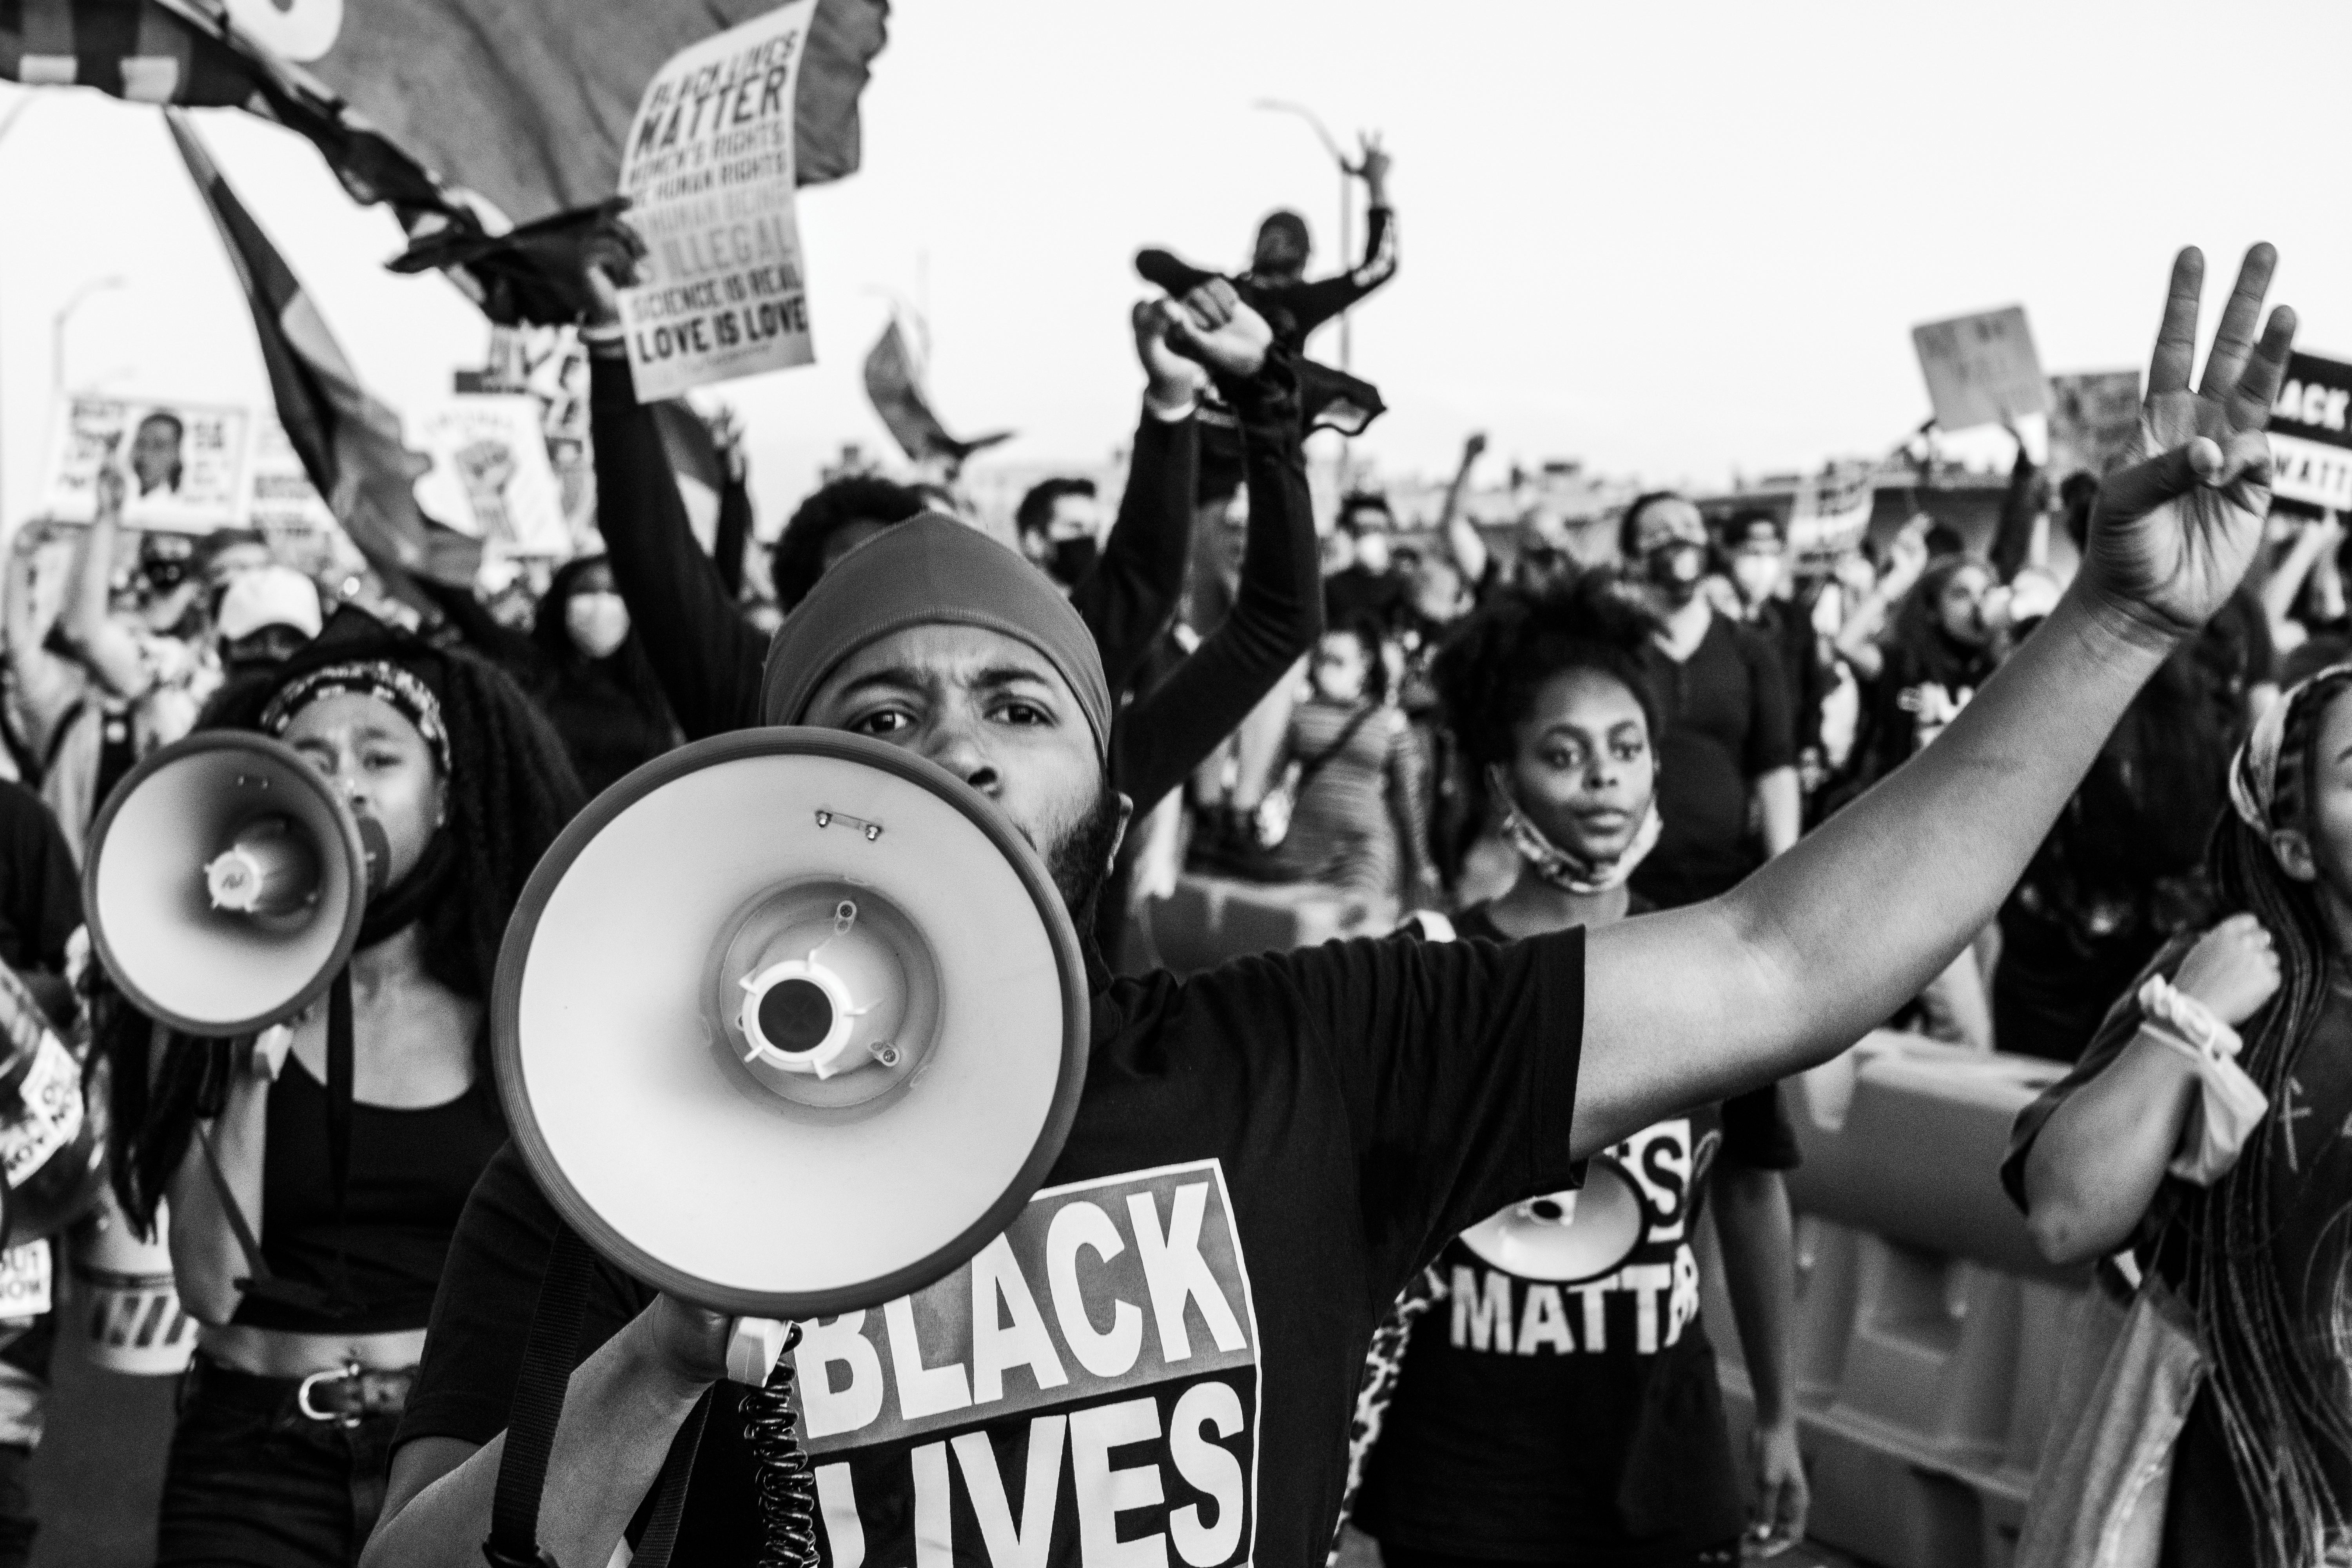 BLM Stronger Together Sweatshirt Black Lives Matter Equality Racial Justice